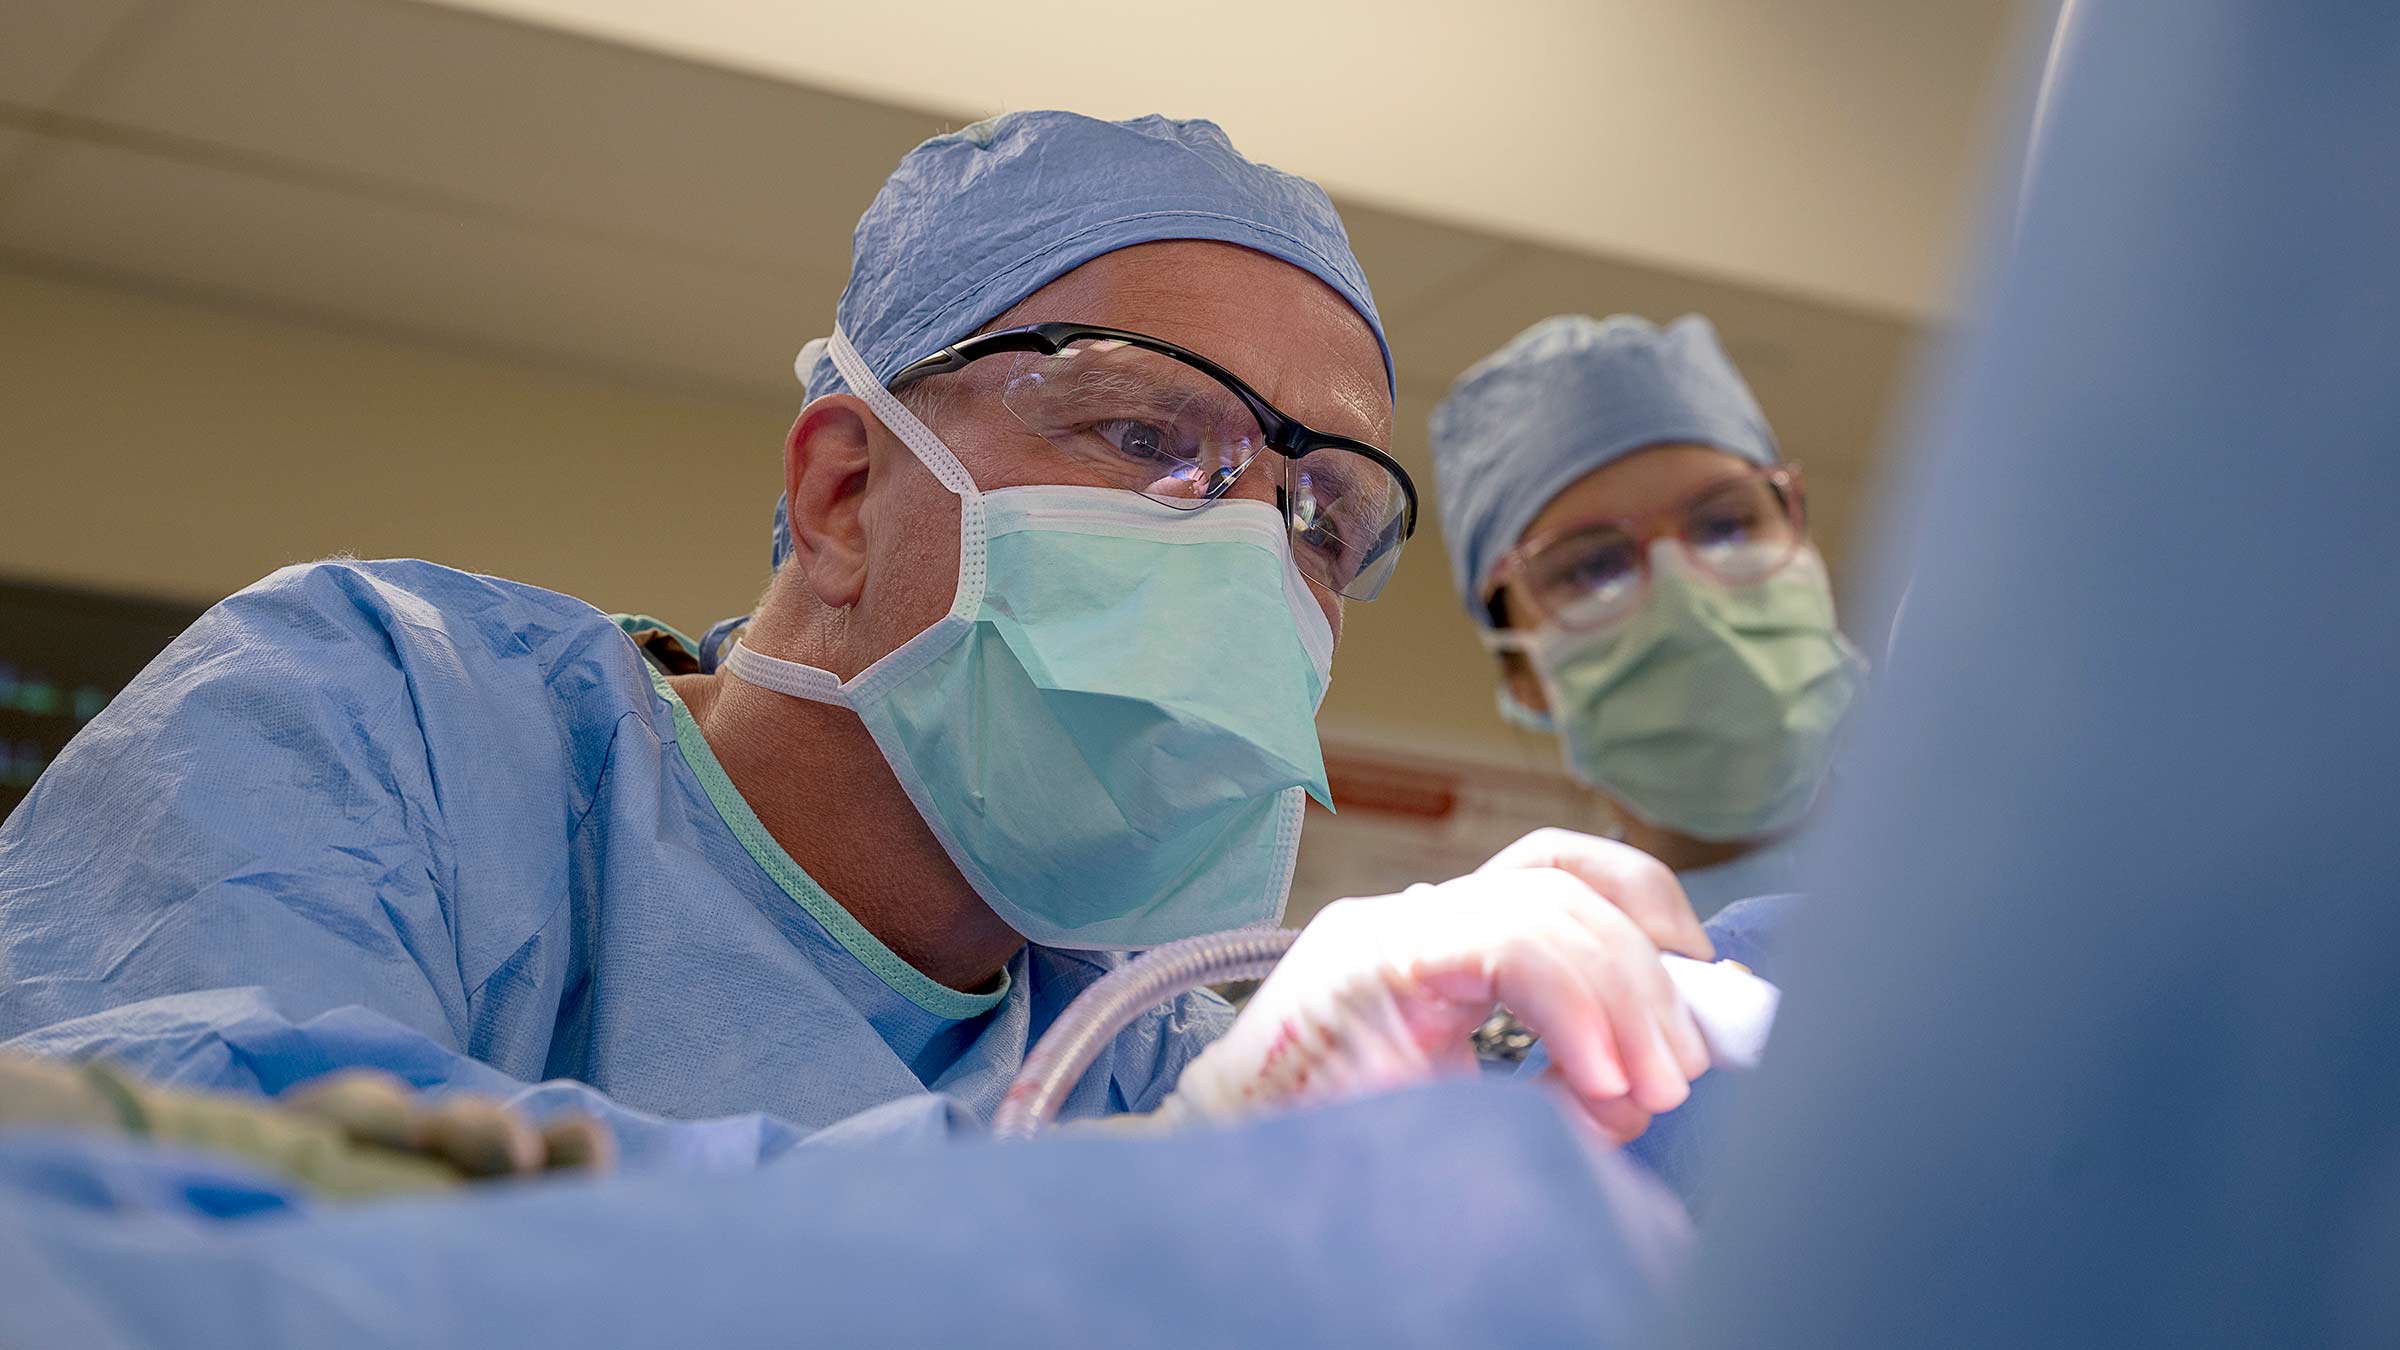 Roman Skoracki performing a surgery